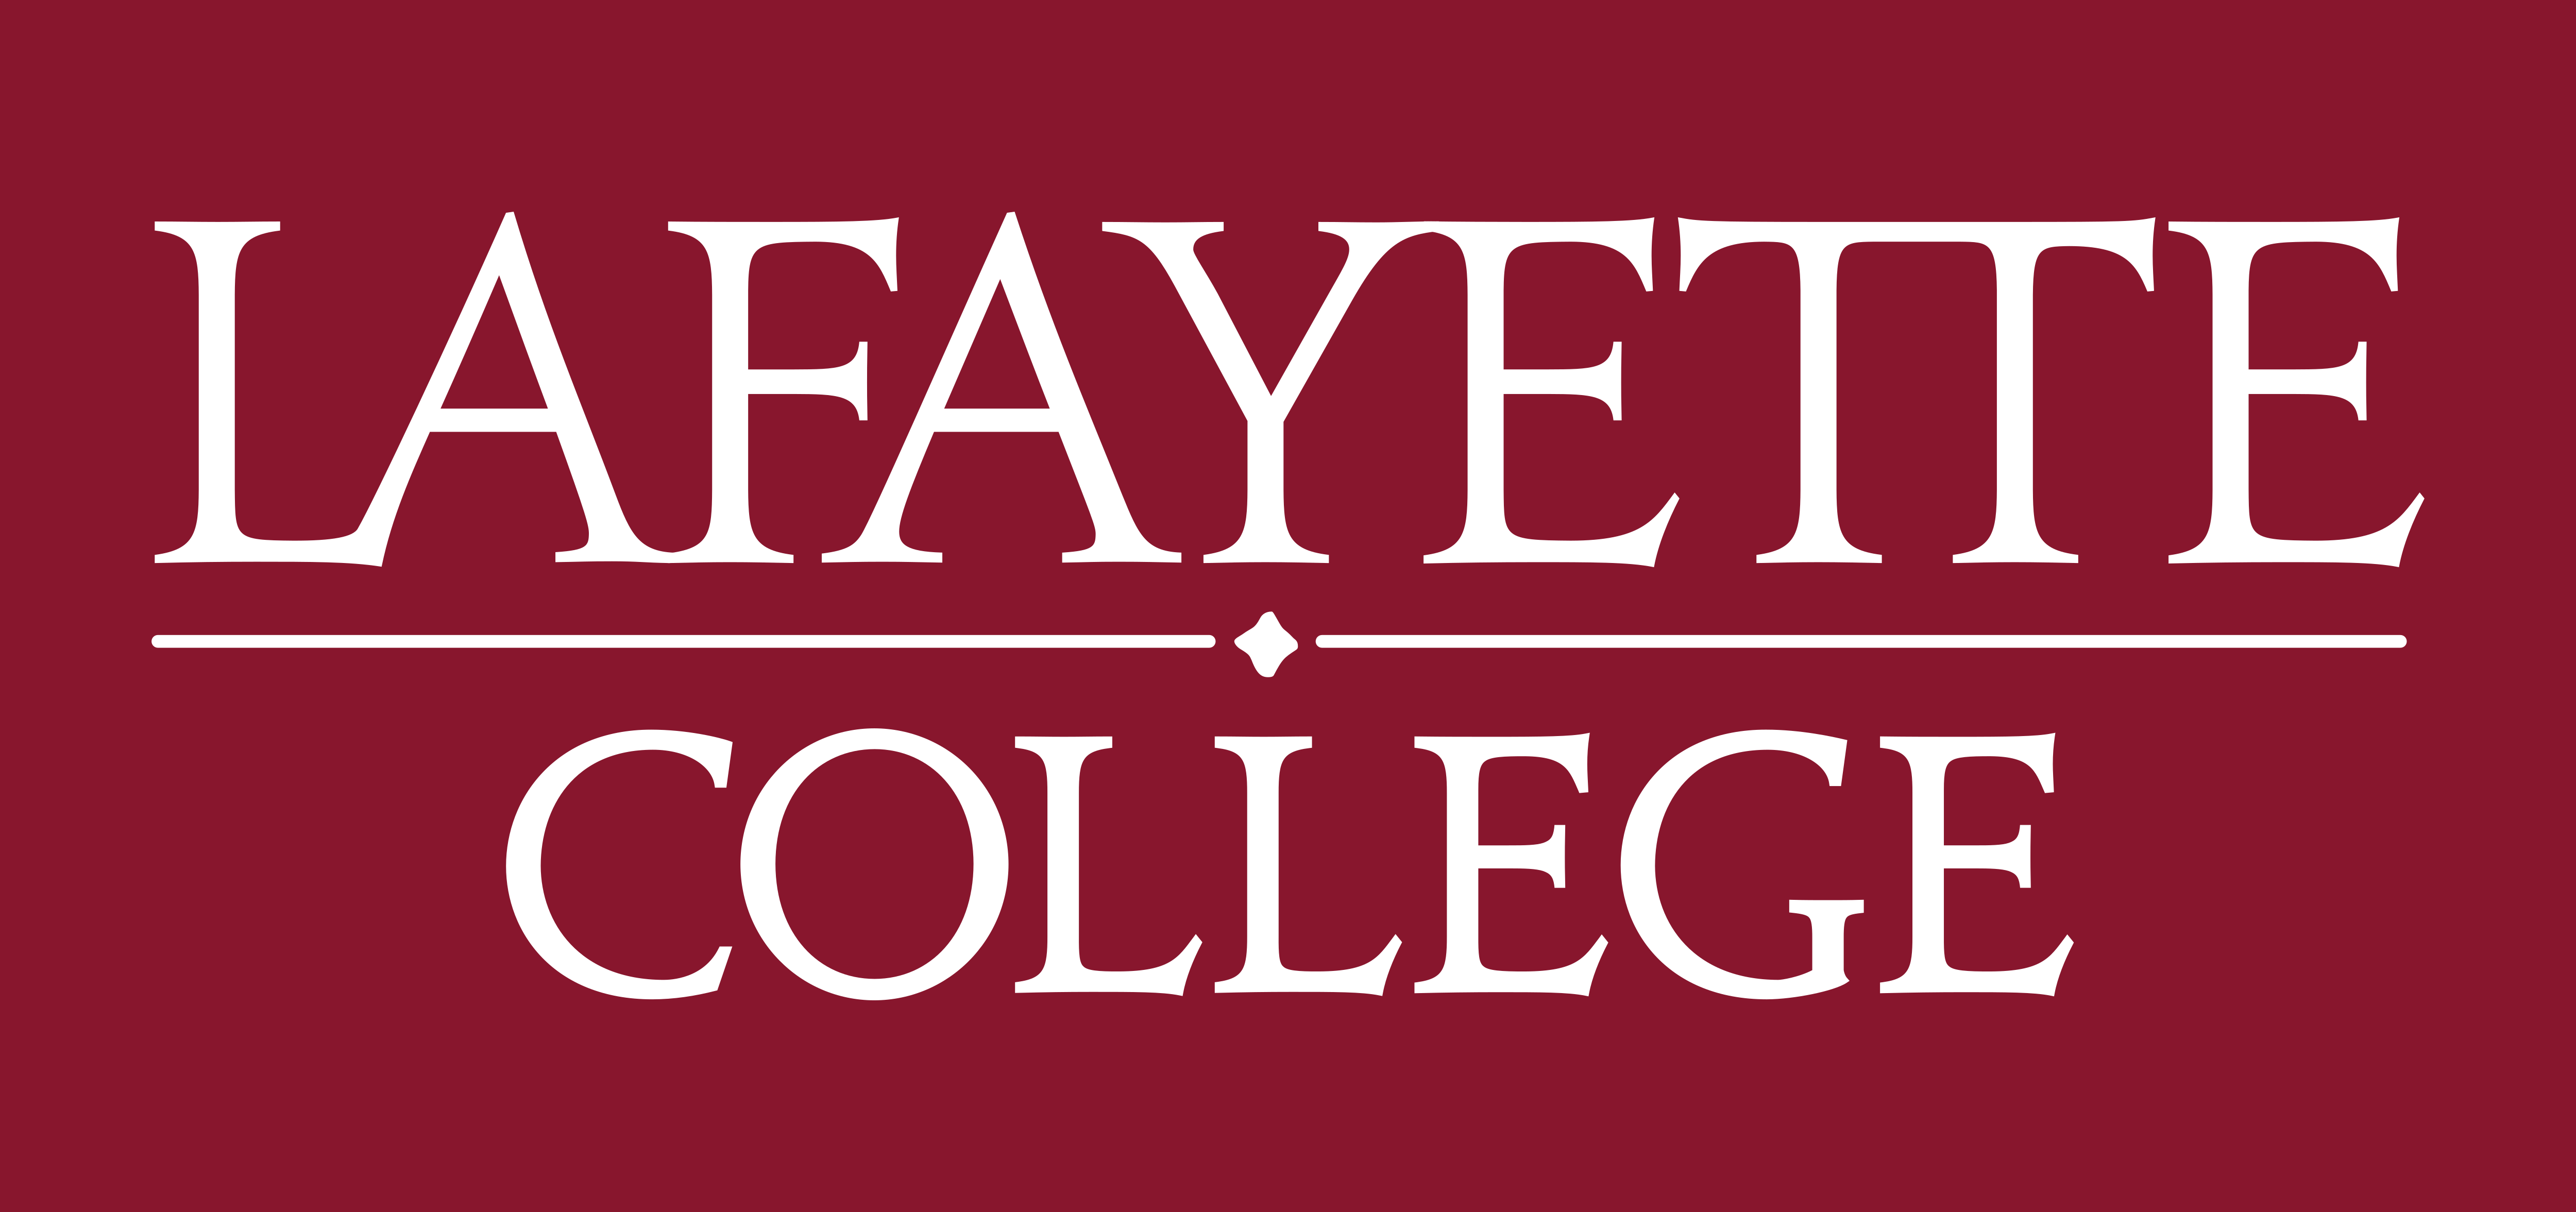 Lafayette College лого